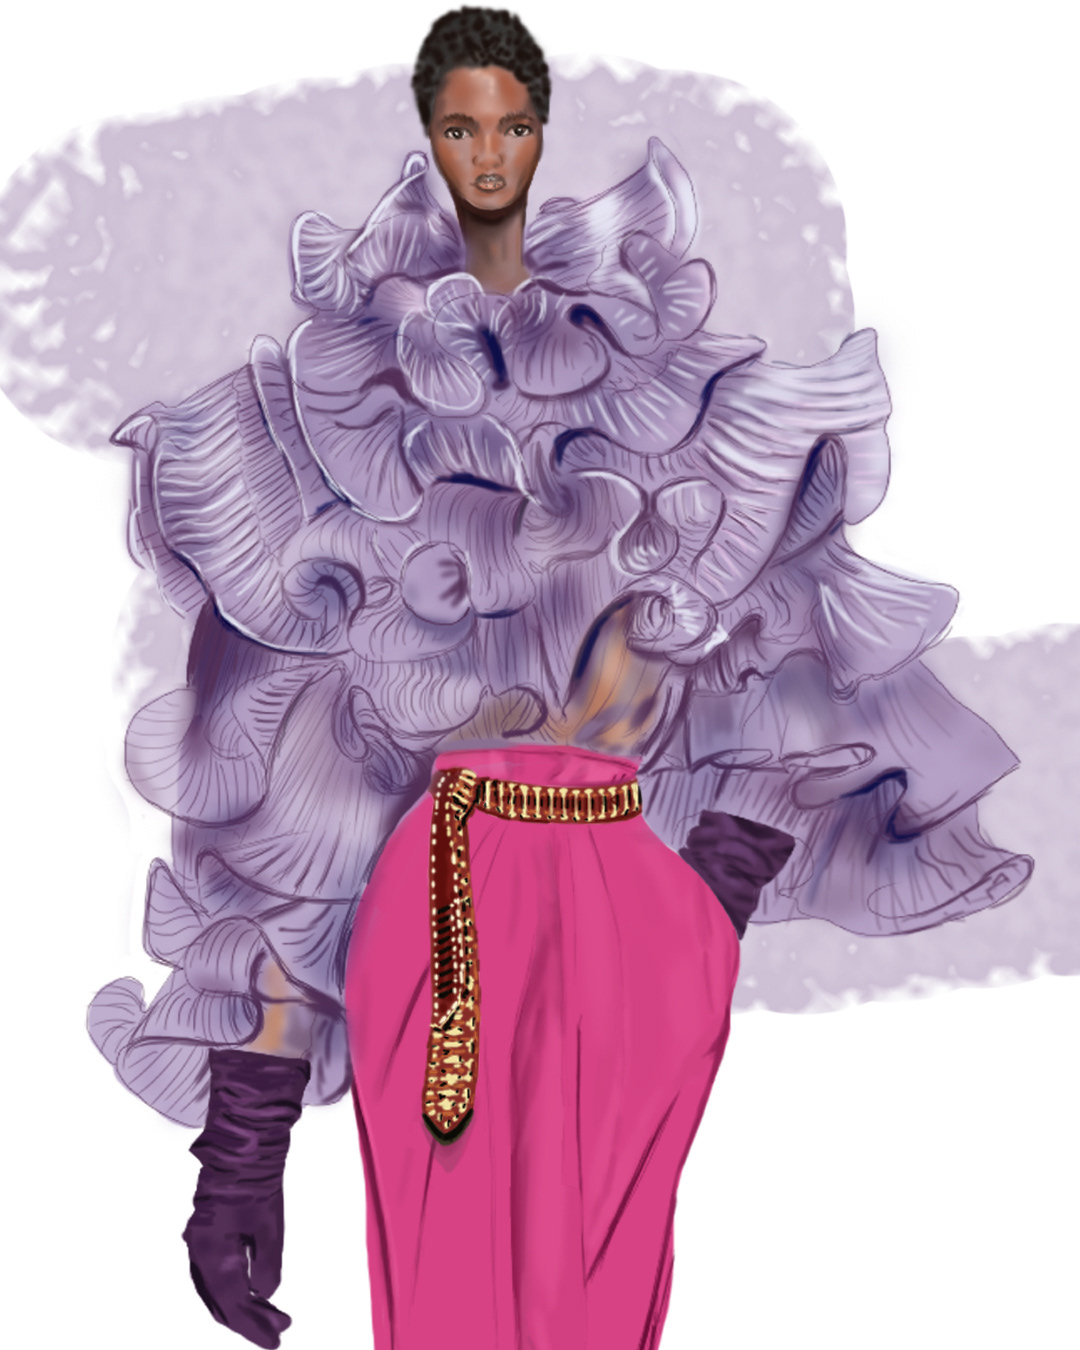 Adobe Photoshop Alberta Ferretti digital illustration fall 2020 Fashion  fashion illustration ILLUSTRATION 